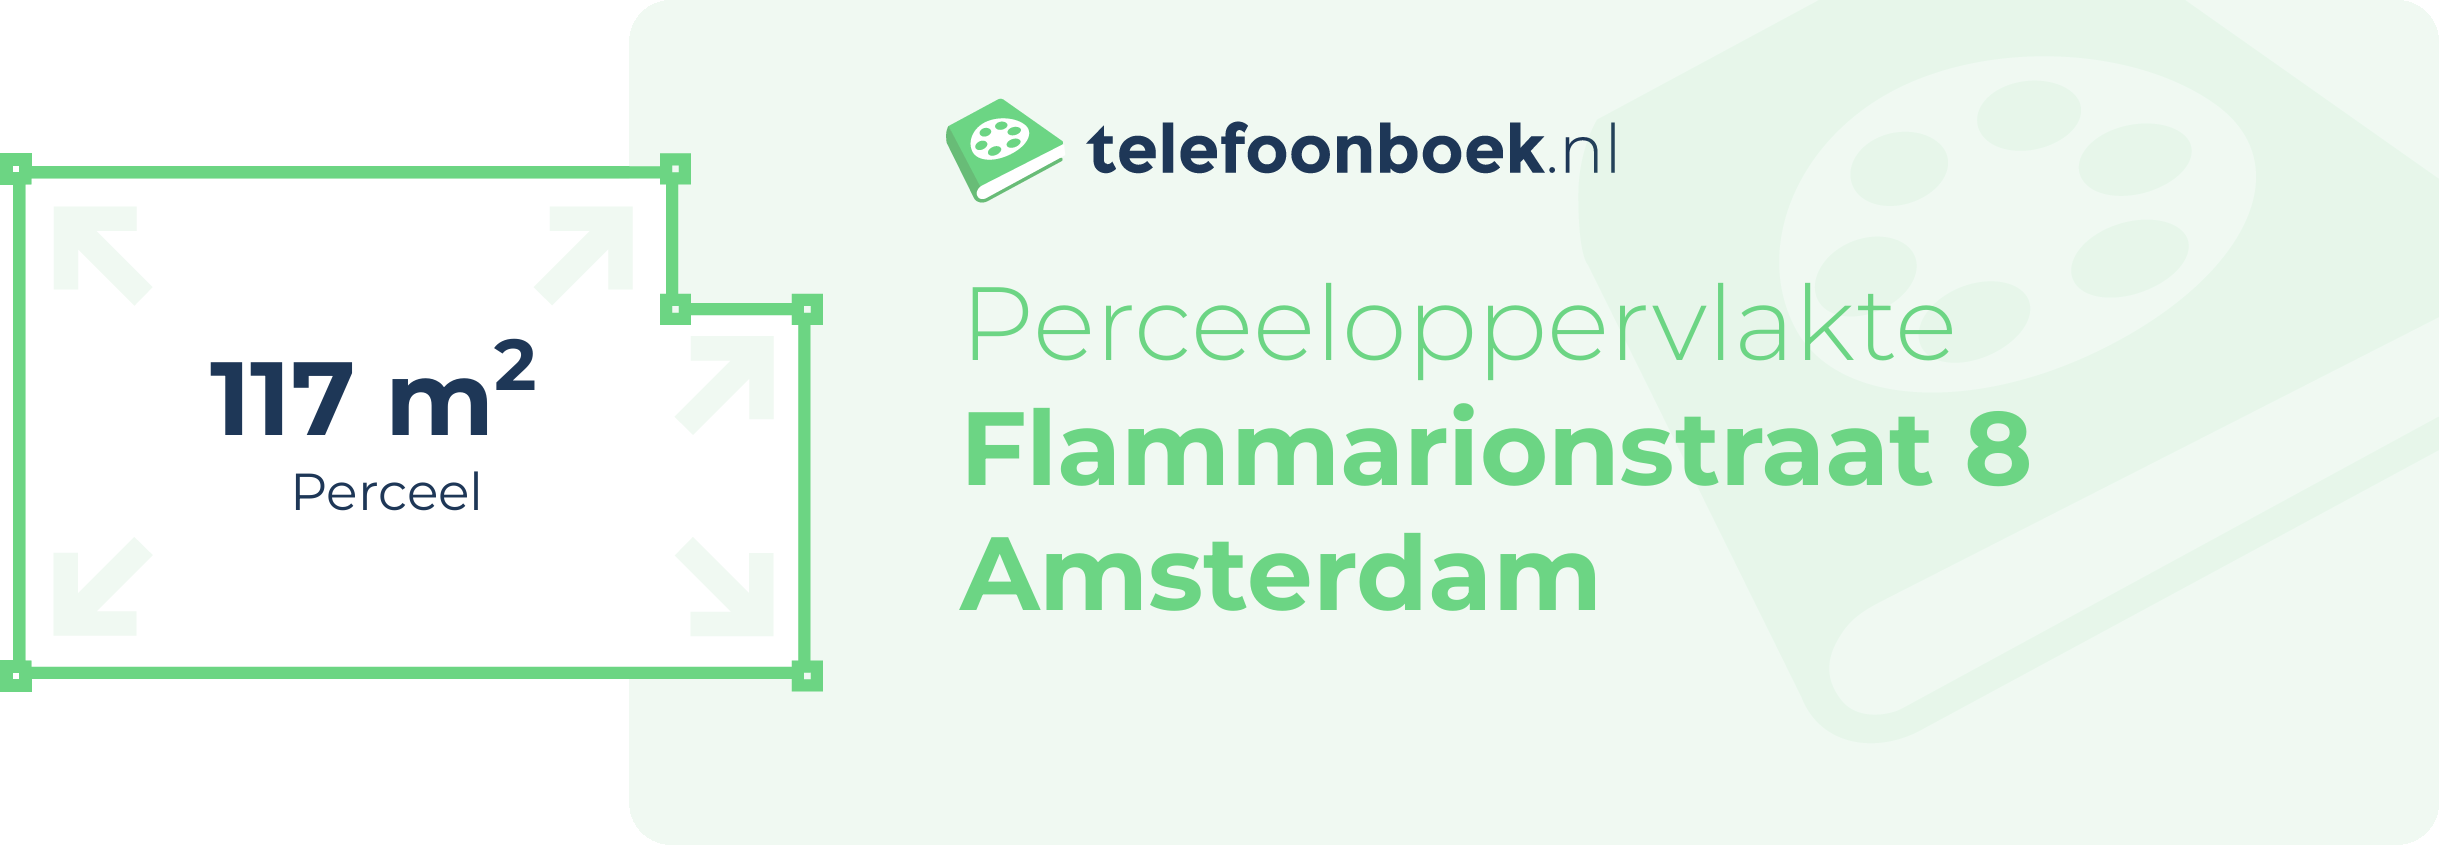 Perceeloppervlakte Flammarionstraat 8 Amsterdam